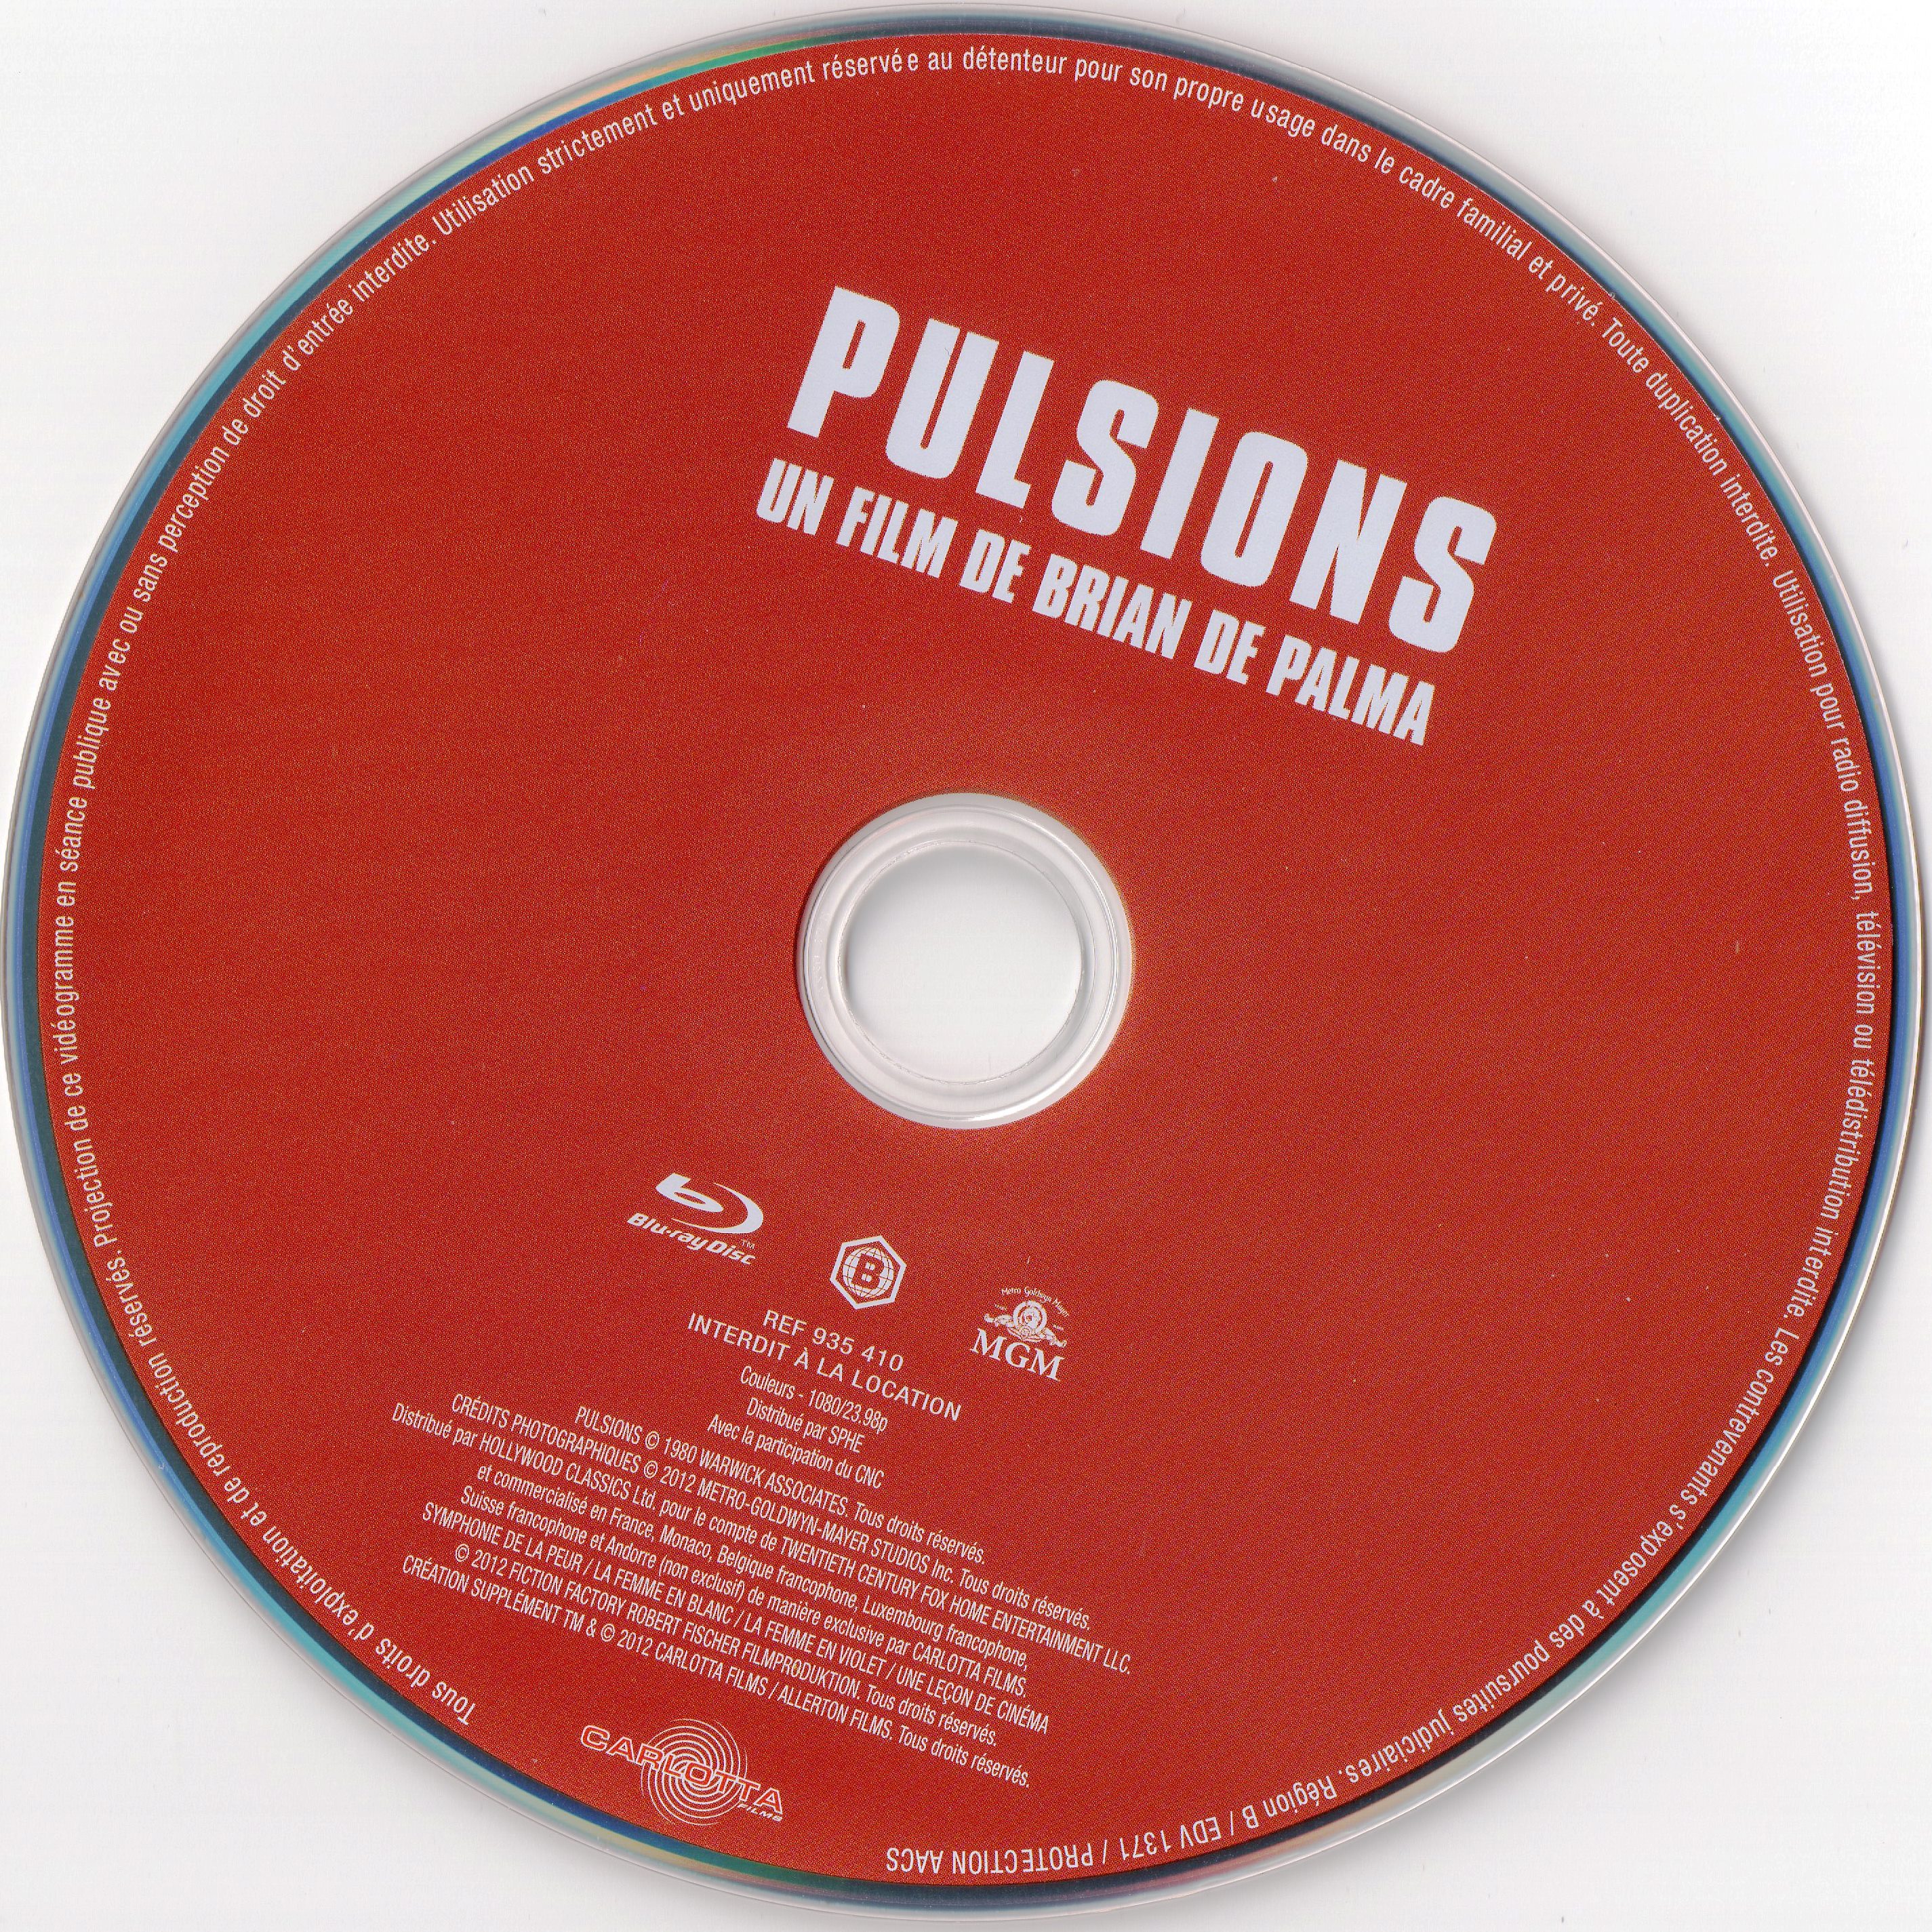 Pulsions (BLU-RAY)